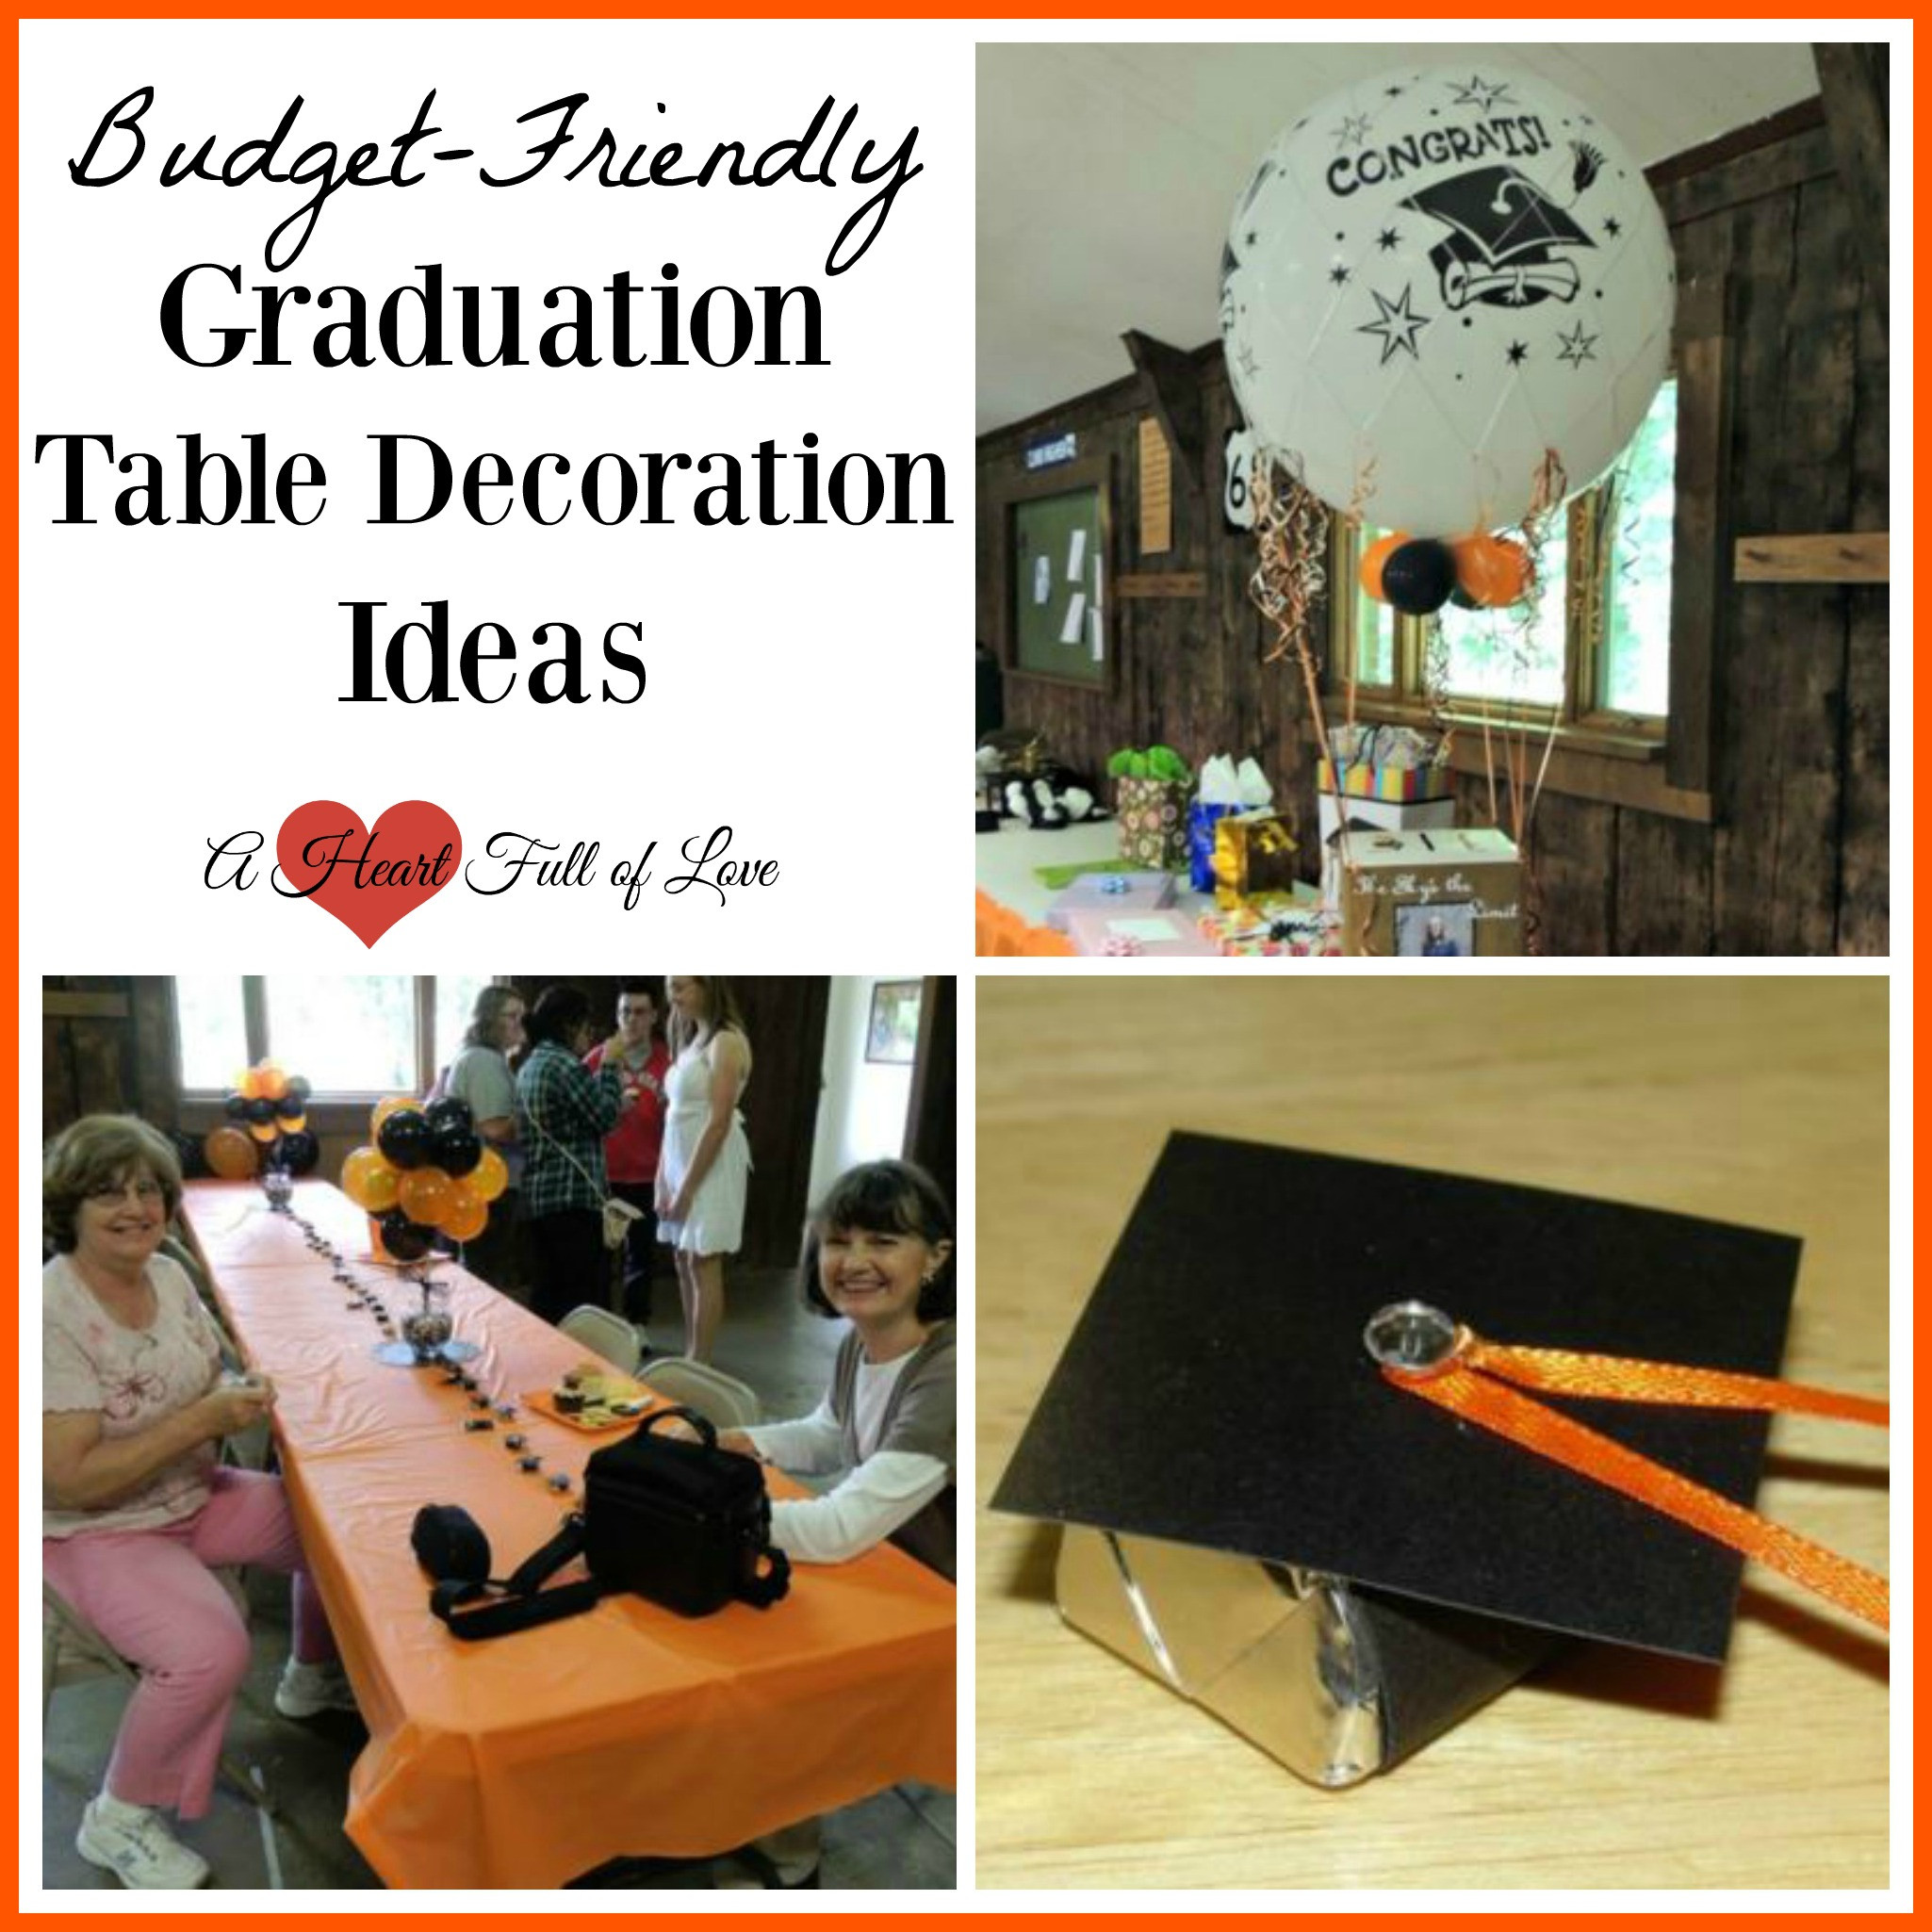 Graduation Party Table Setting Ideas
 Graduation Table Decoration Ideas A Heart Full of Love